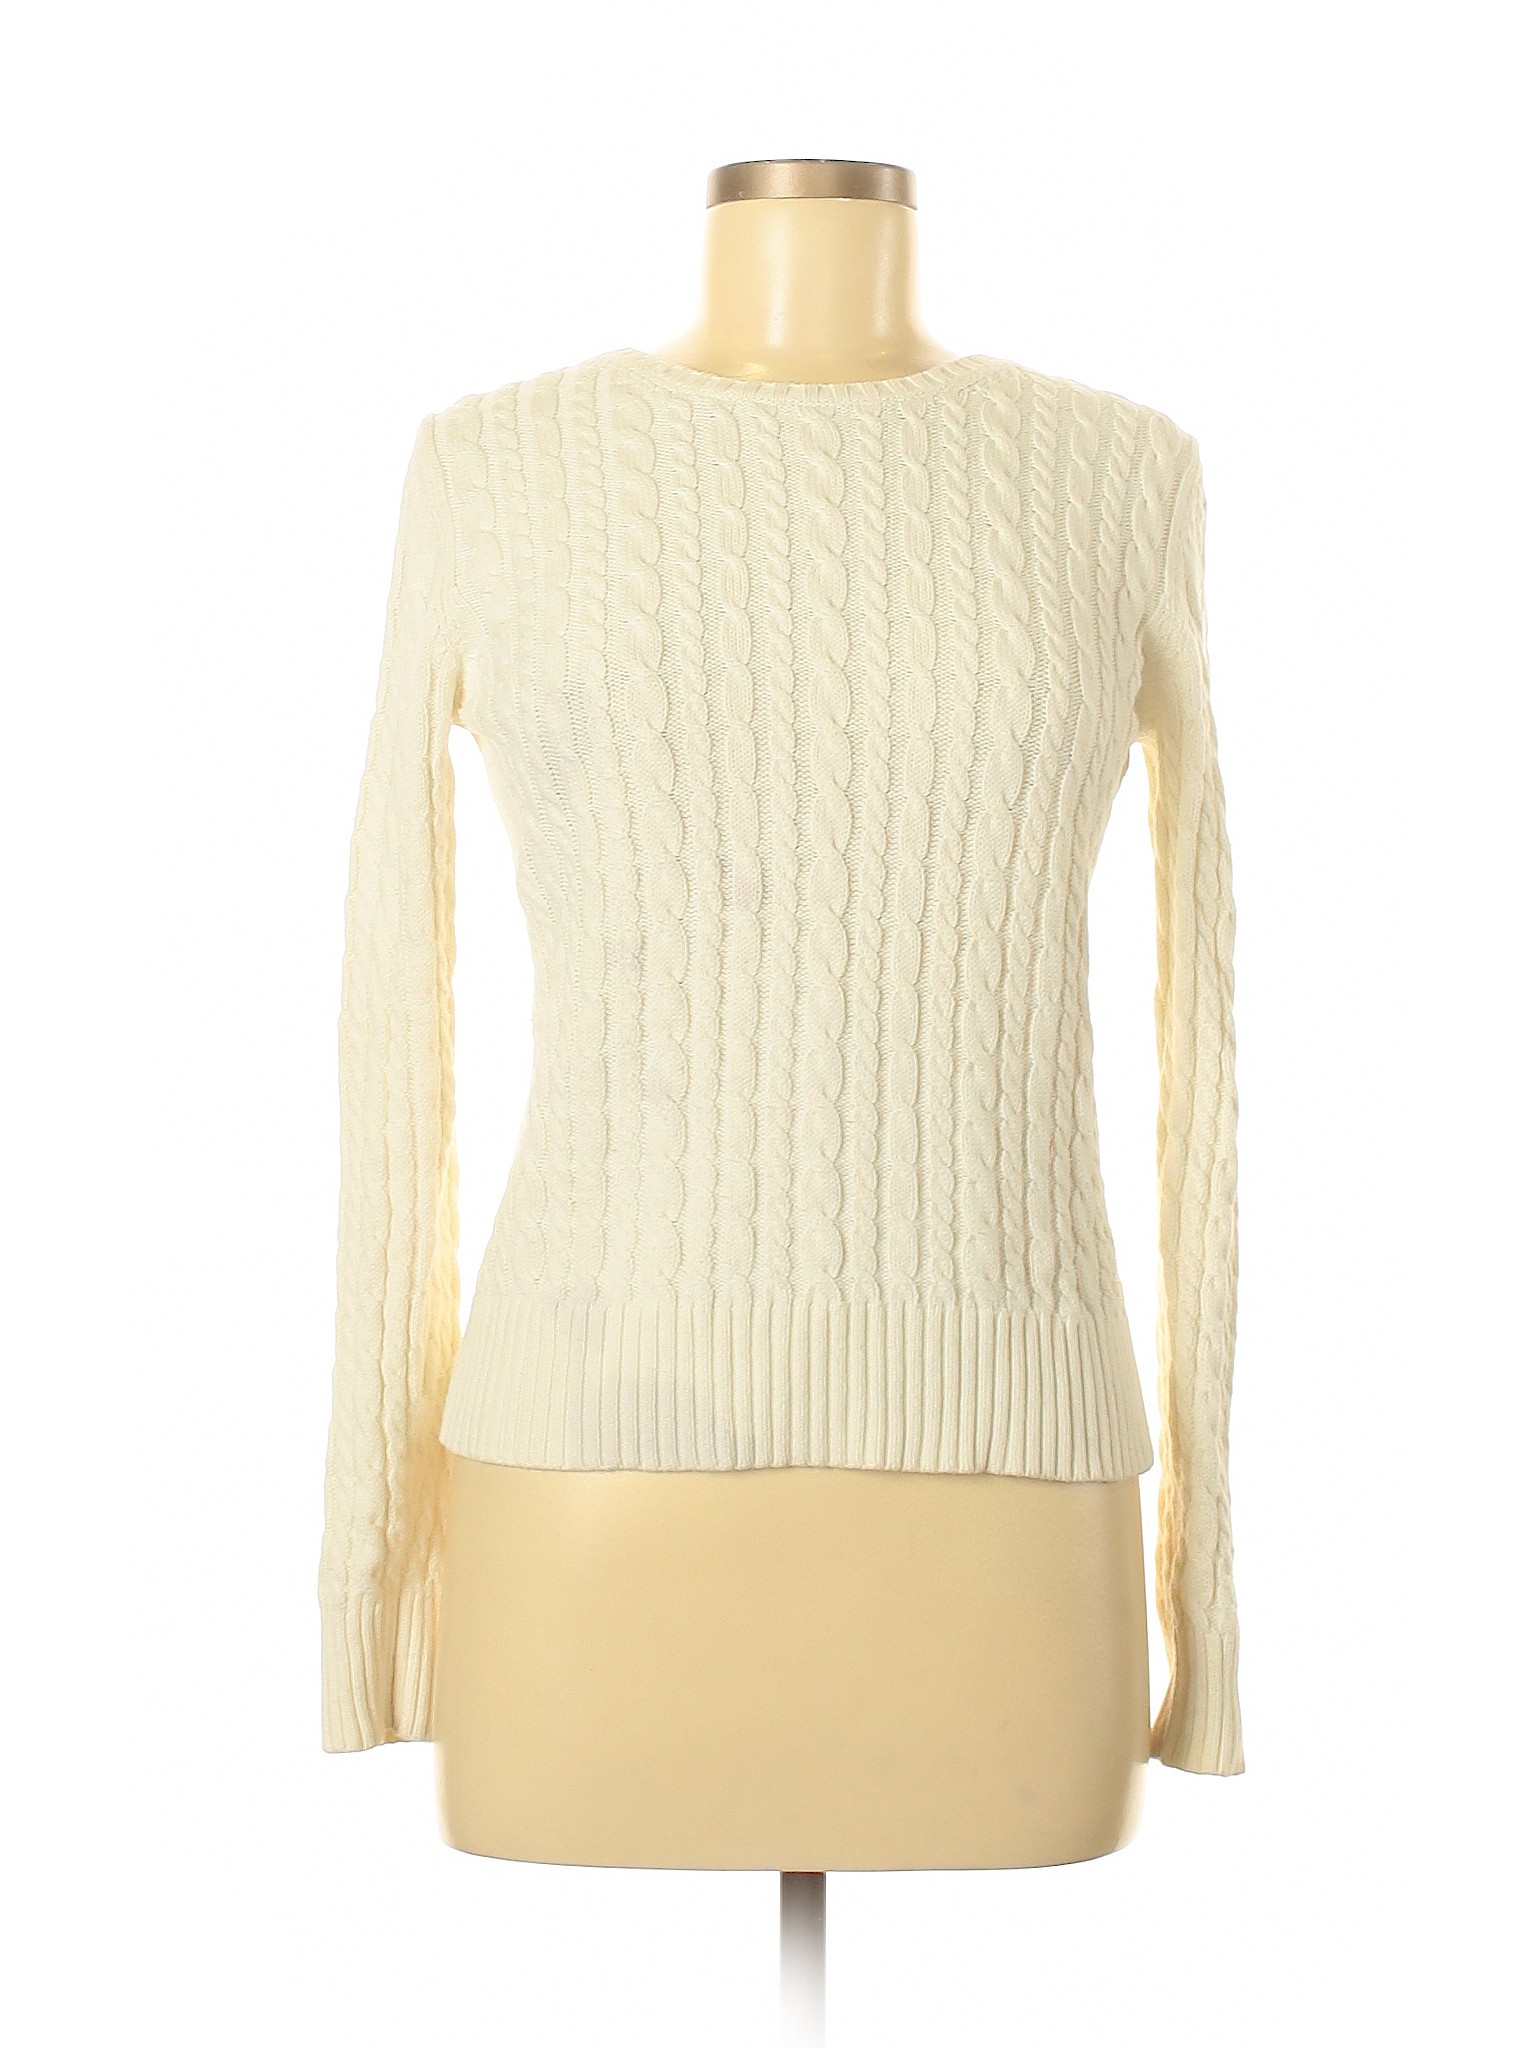 Gap Women Ivory Pullover Sweater M | eBay